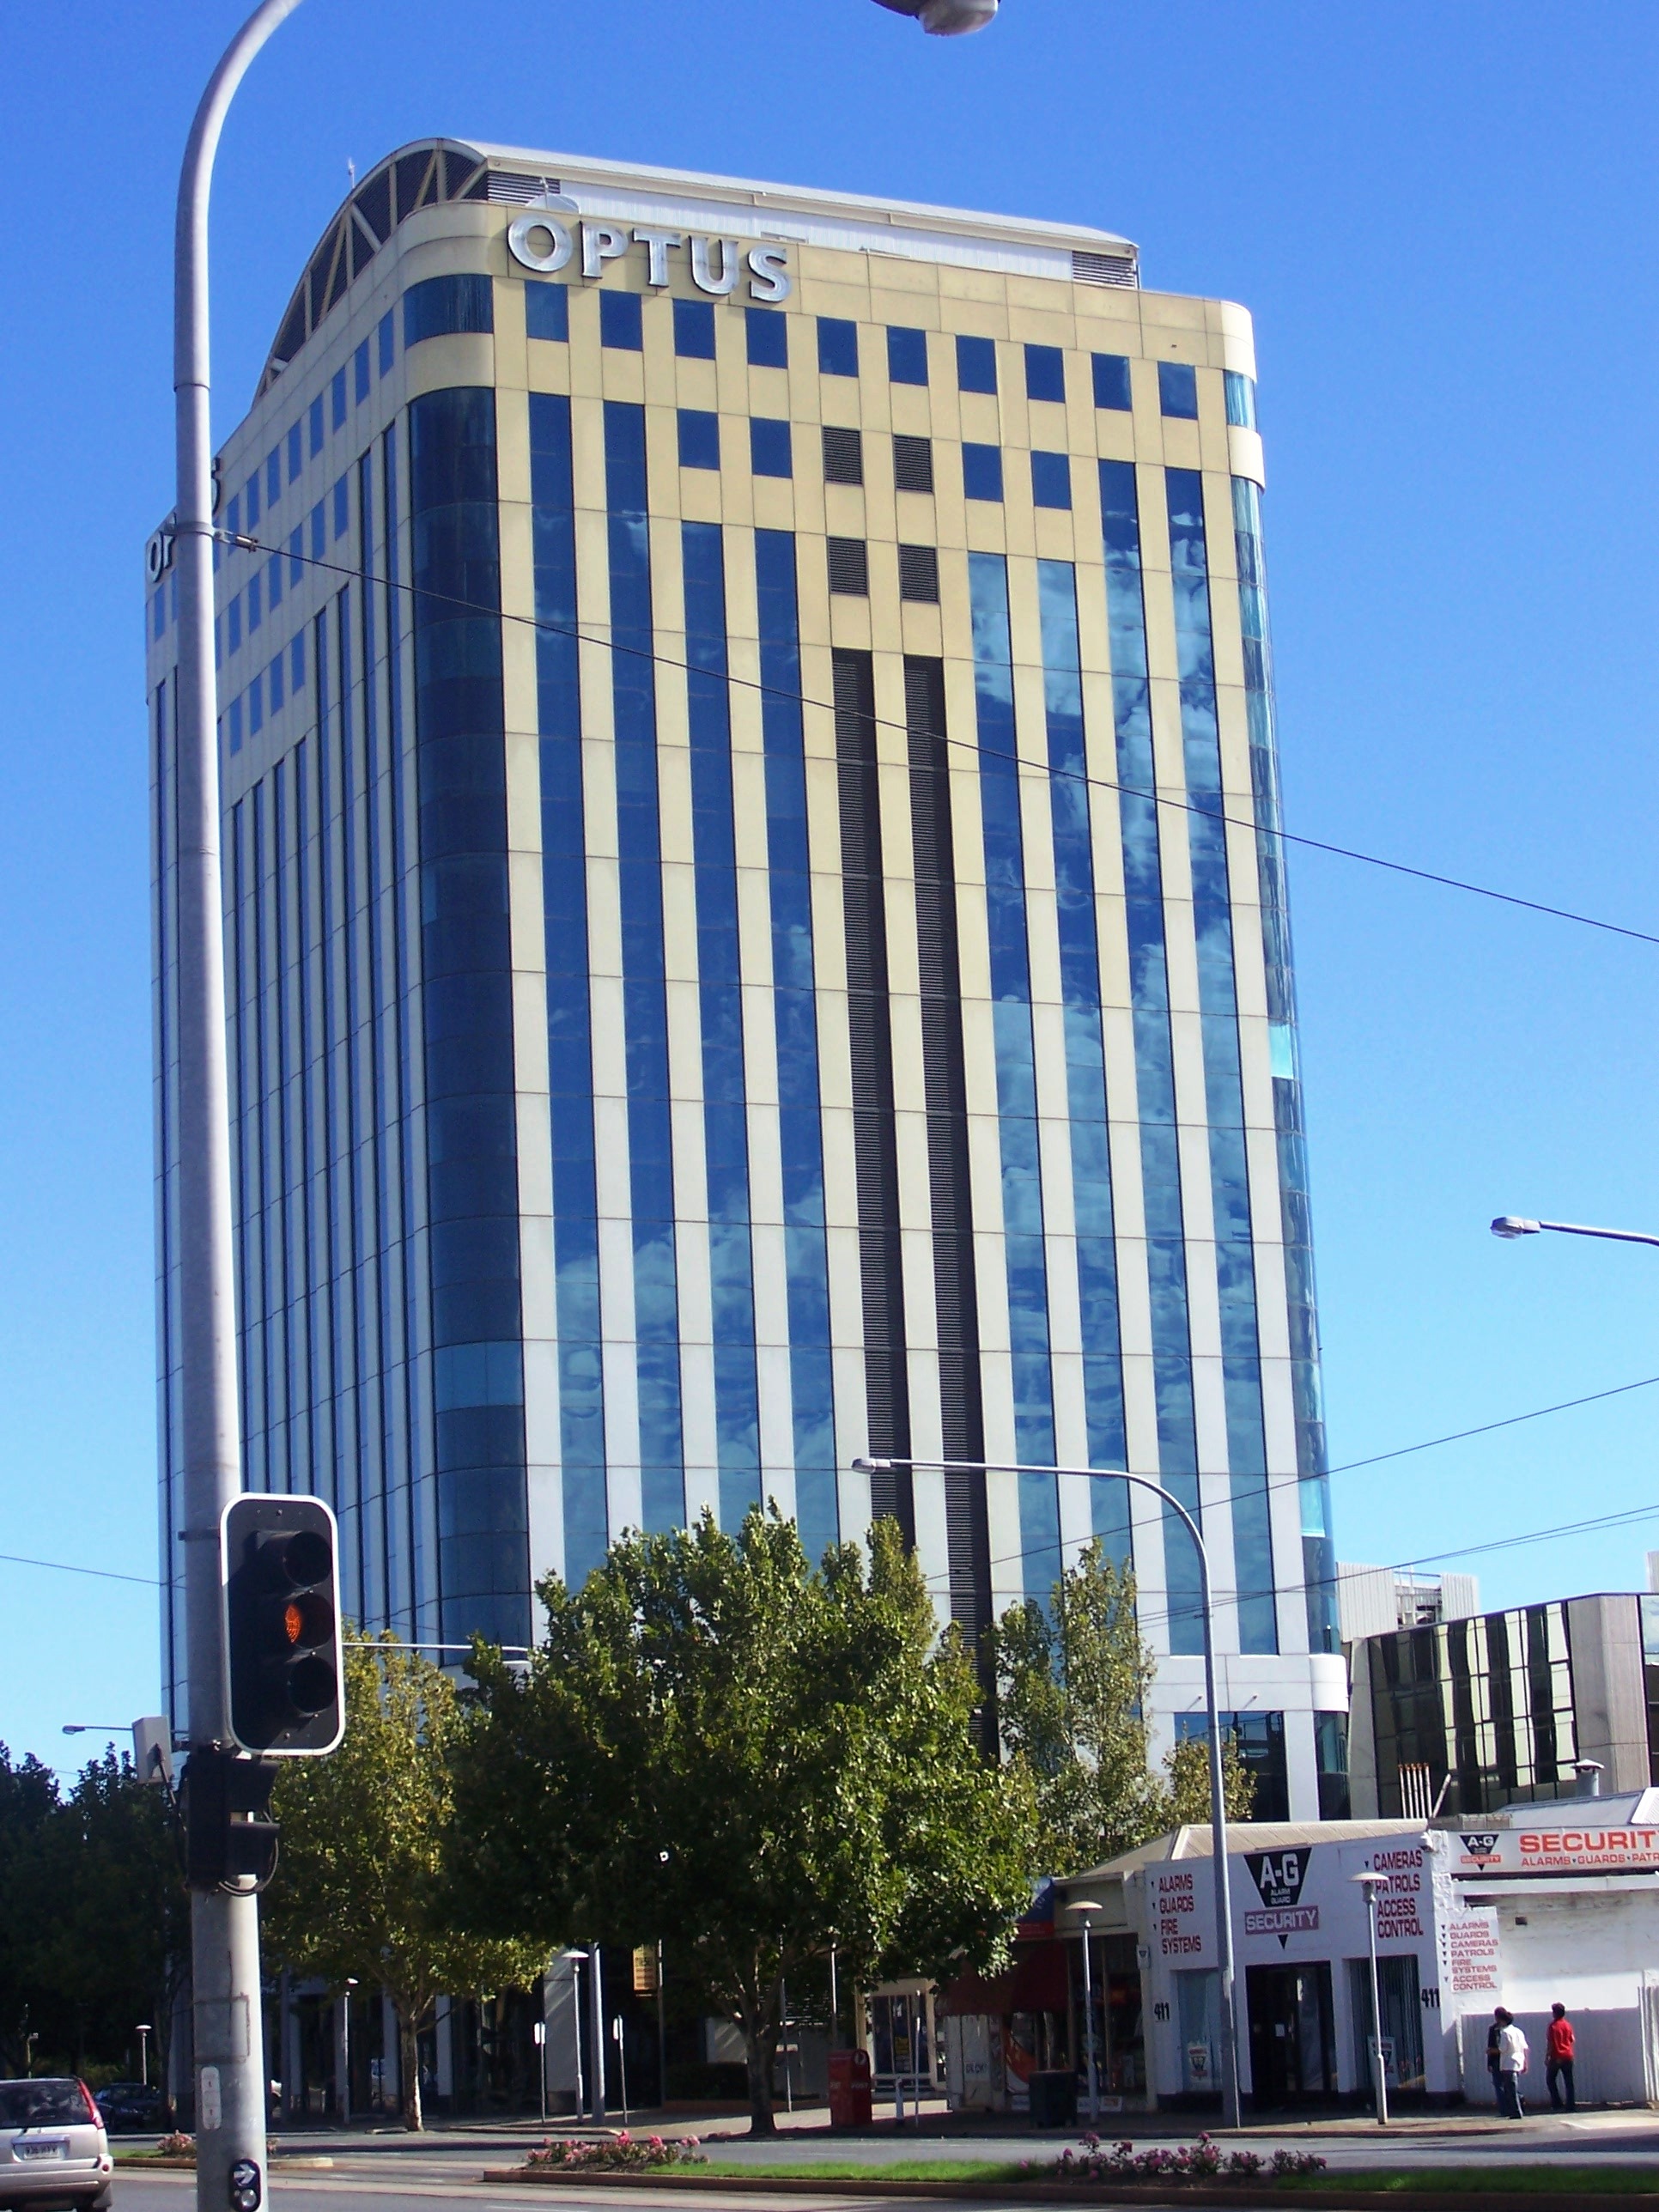 File:Optus building Adelaide Australia.jpg - Wikimedia Commons